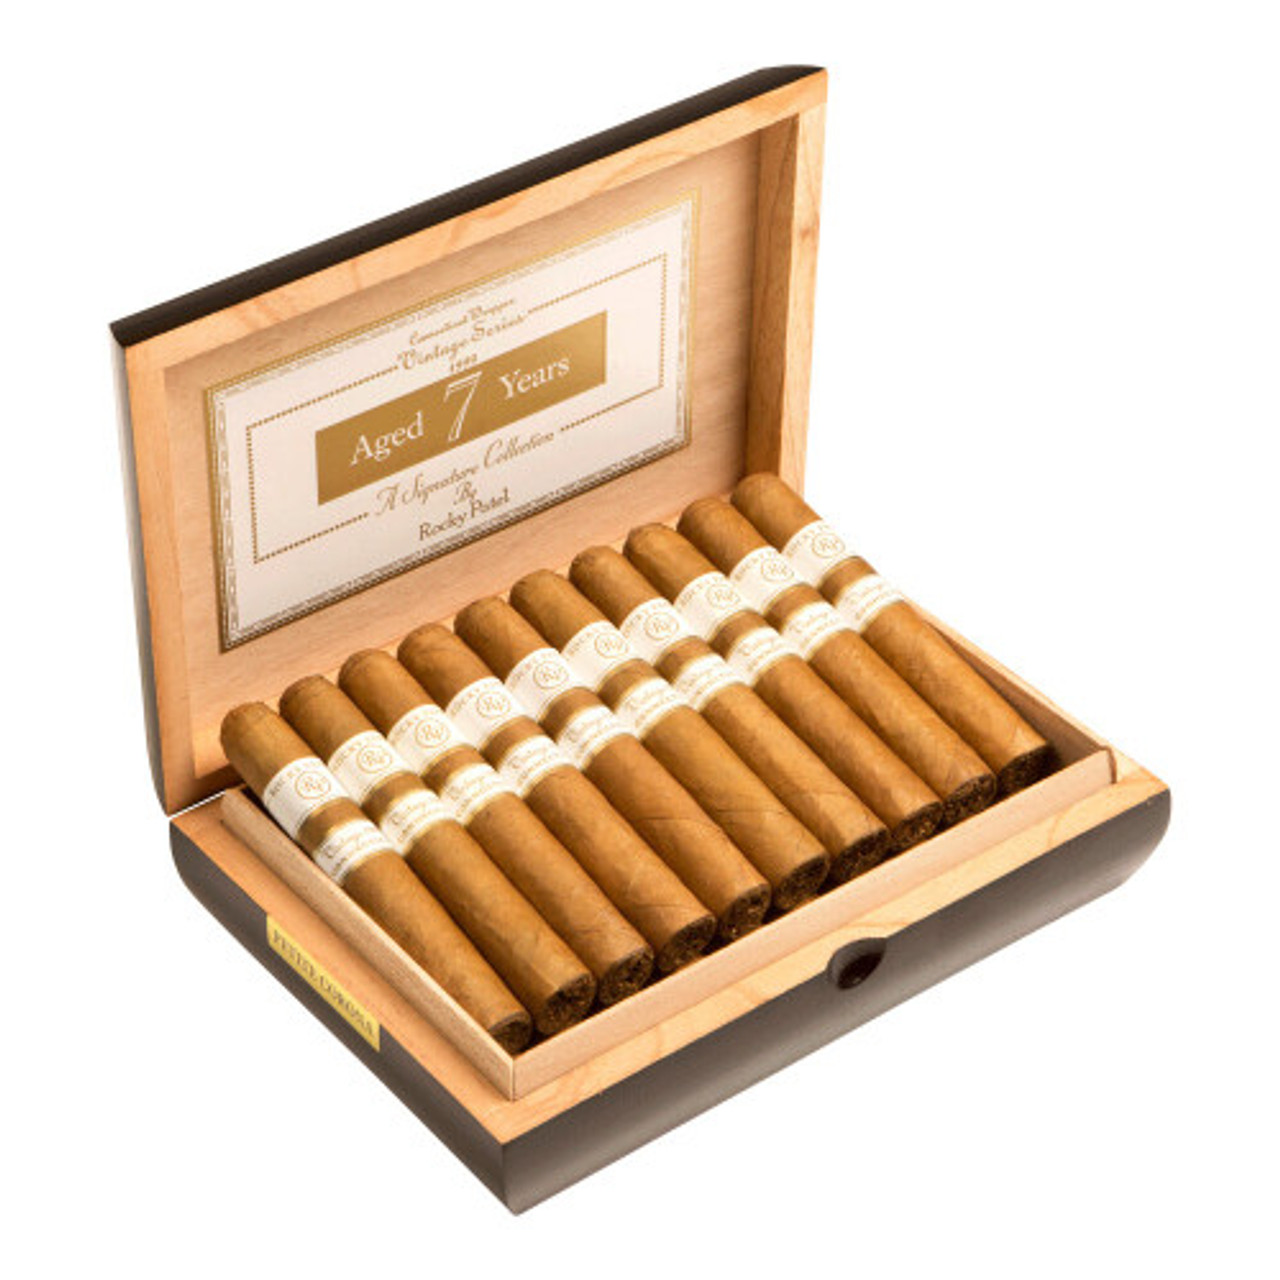 Rocky Patel Vintage 1999 Petite Corona Cigars - 4.5 x 44 (Box of 20) Open